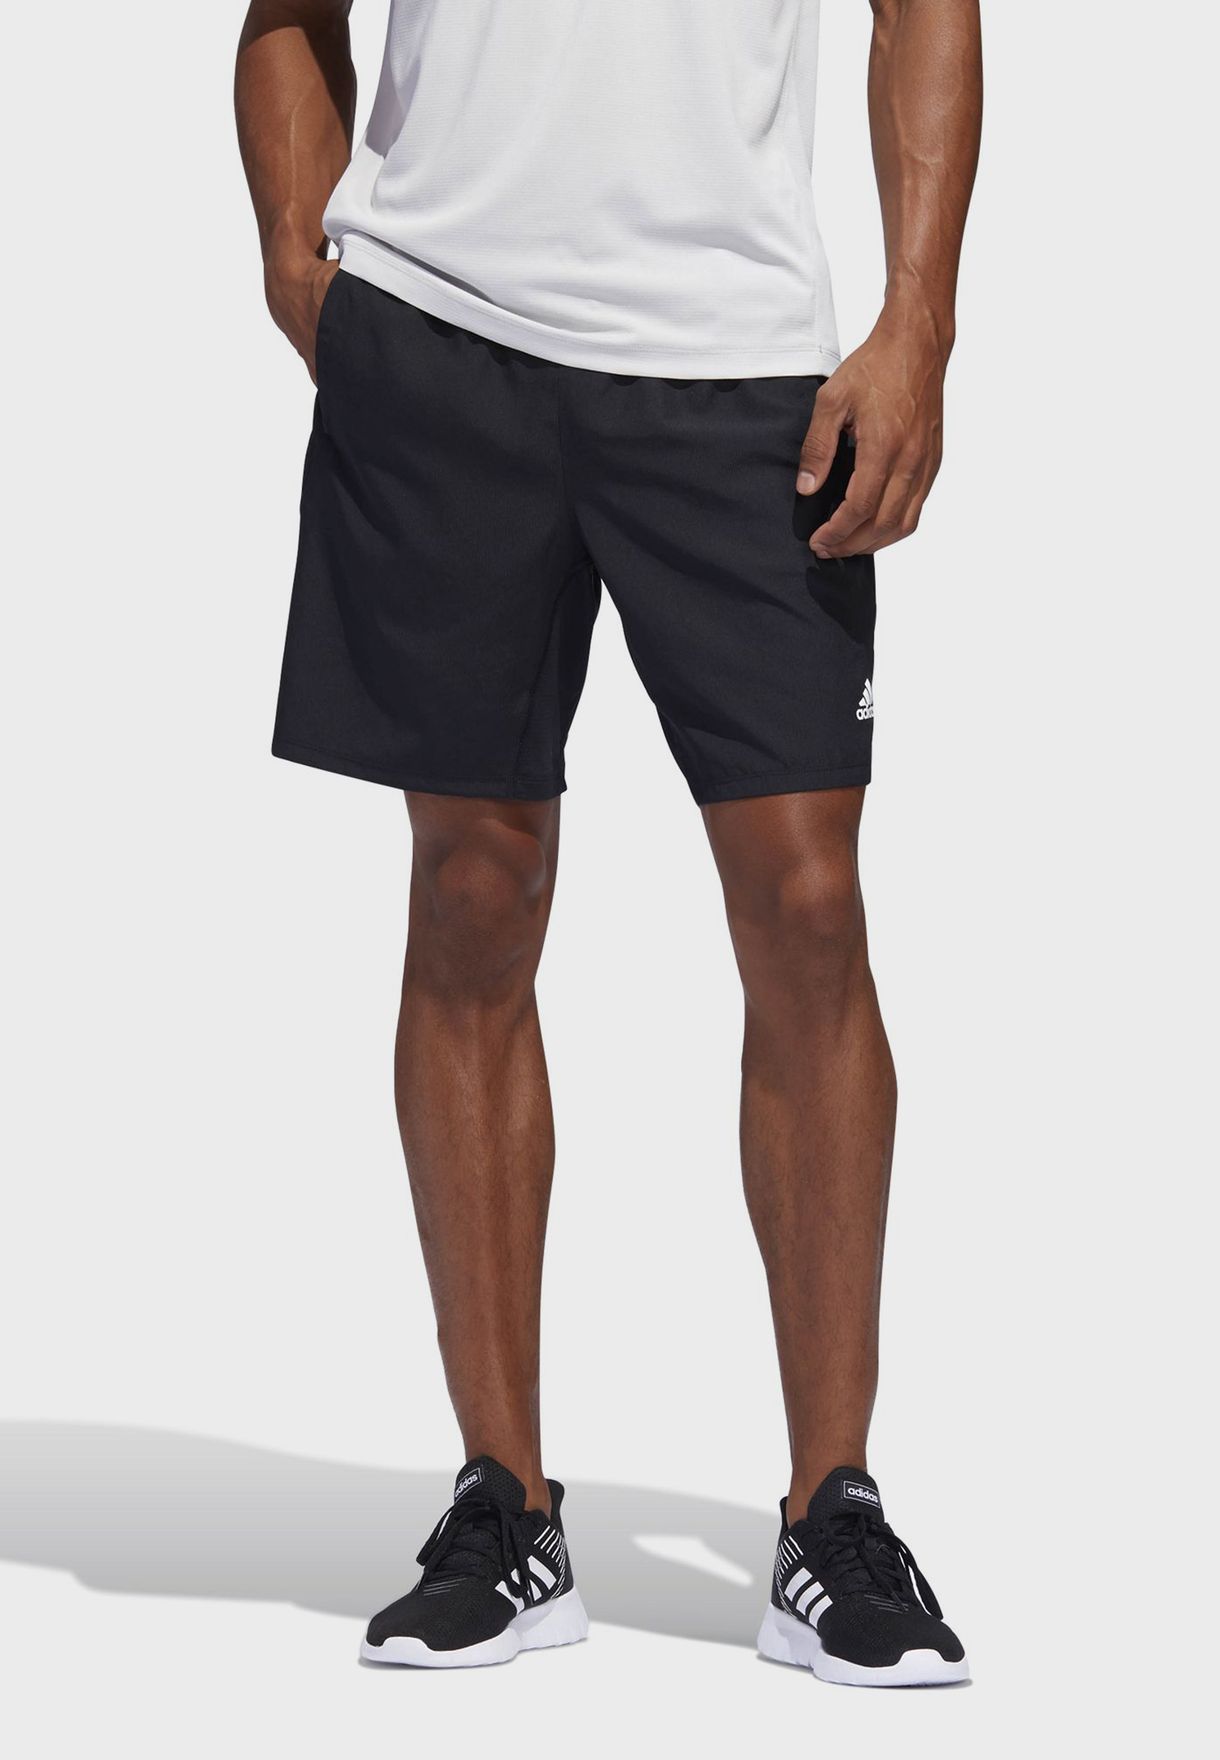 adidas 4krft woven shorts